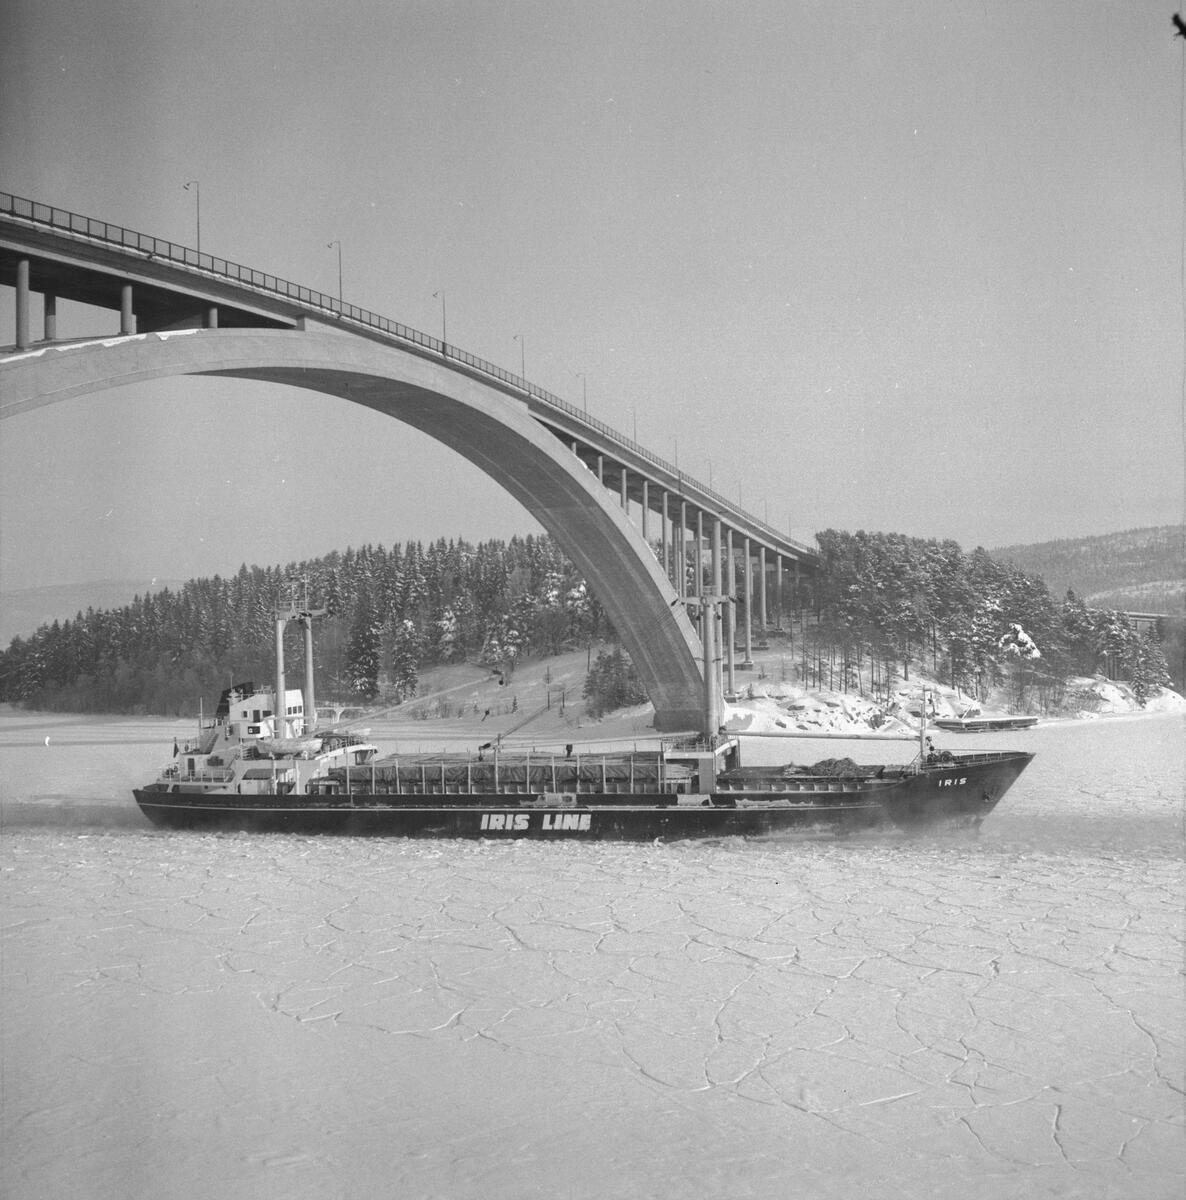 Fartyget Iris vid Sandöbron

